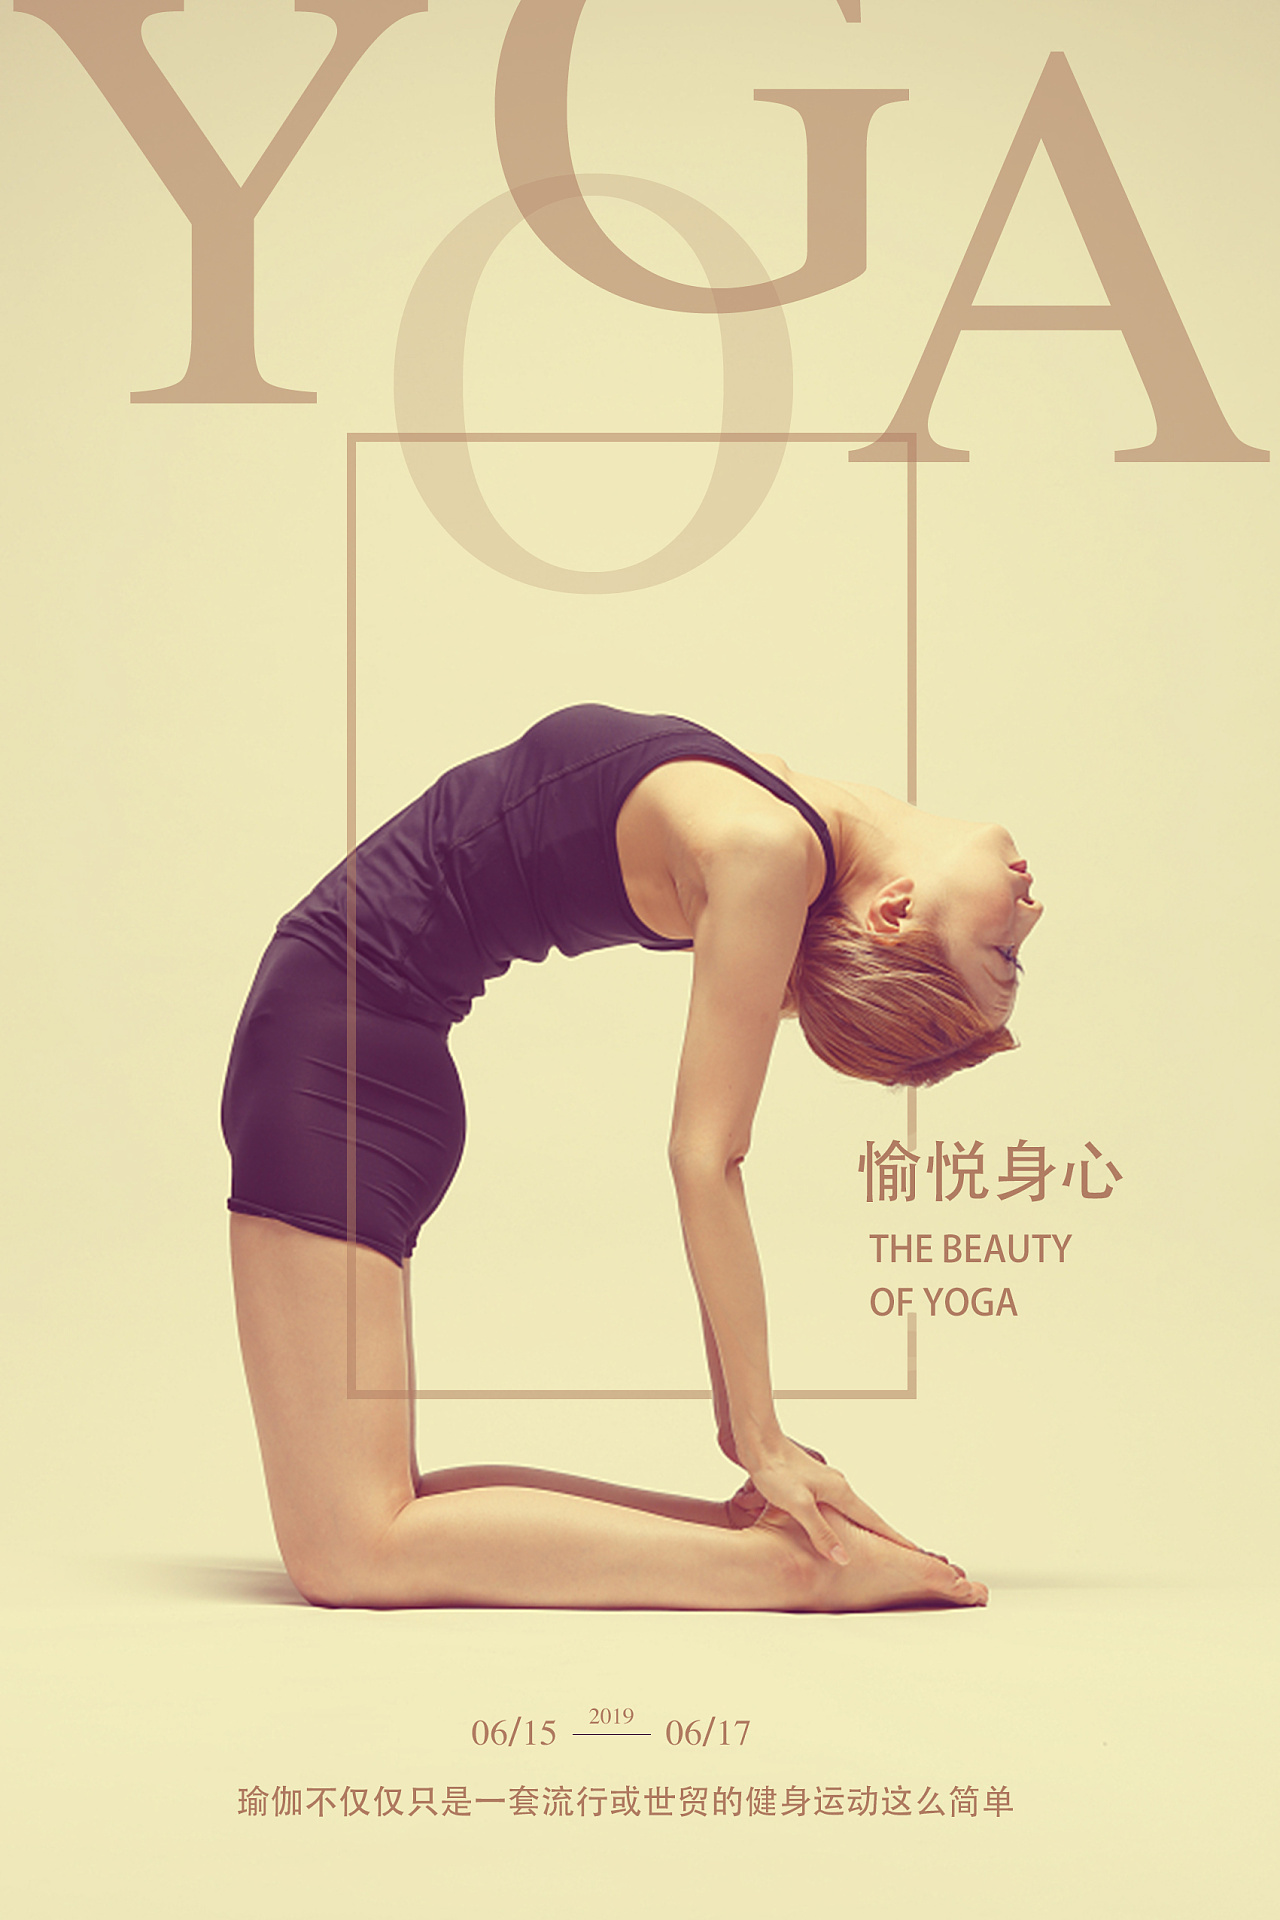 Yoga Sanskrit Study with Samantha (3 hr) / 瑜伽梵文學習 (廣東話) (3 hr) - One ...